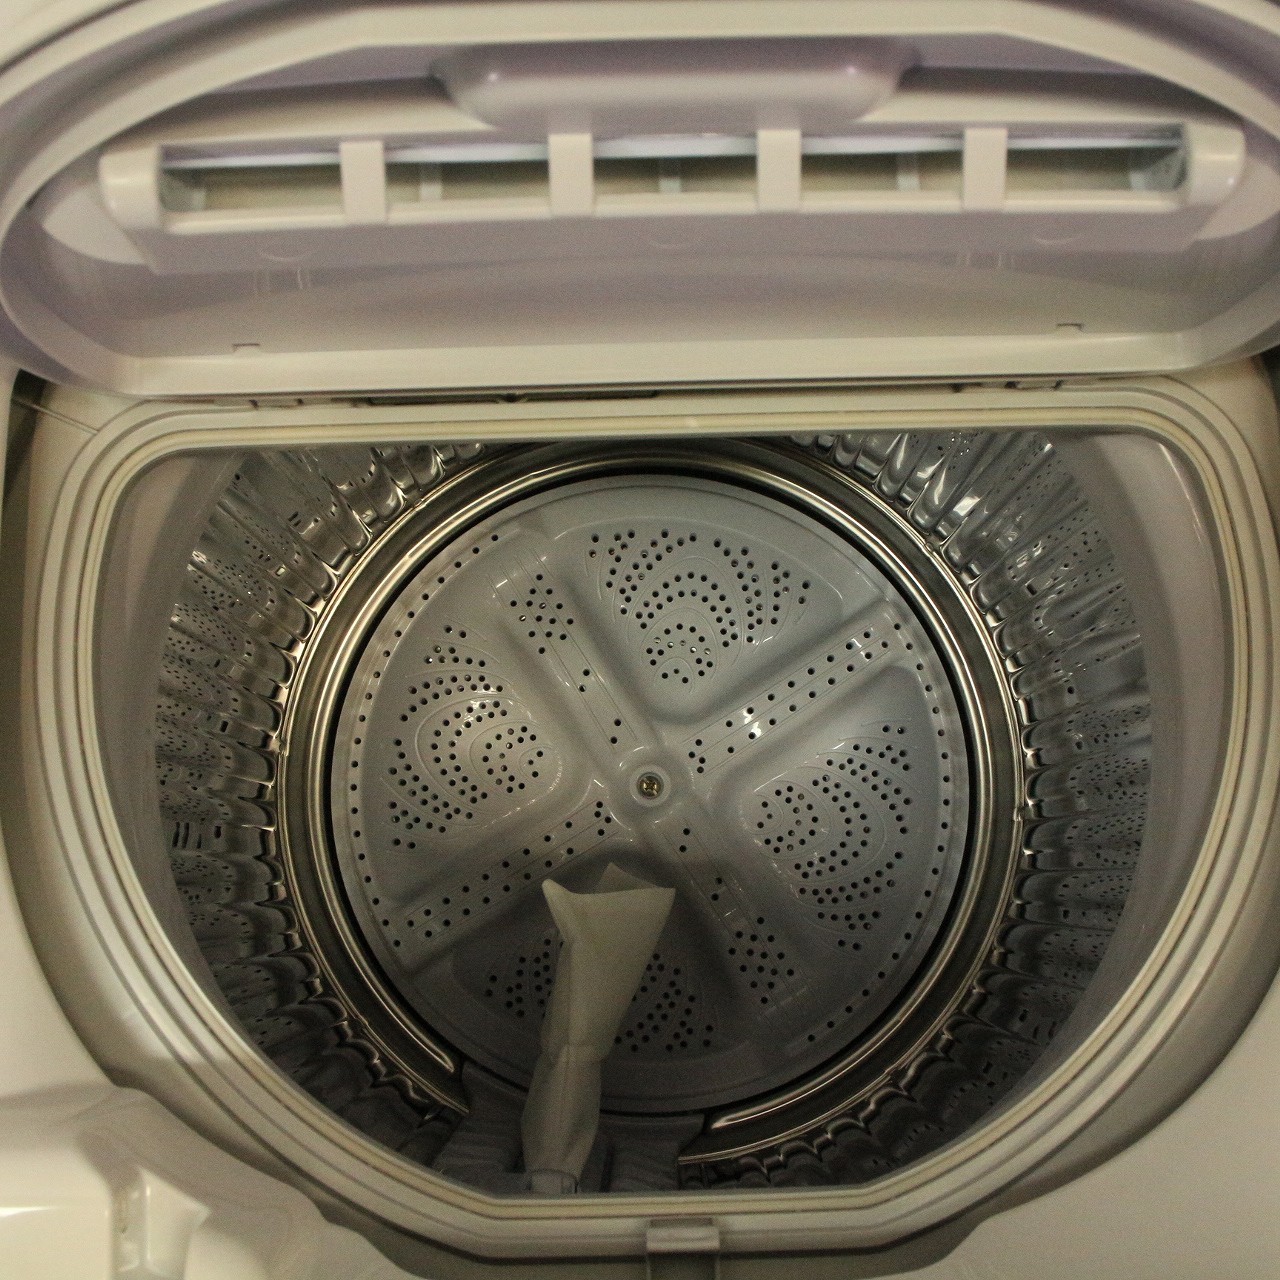 中古】〔展示品〕 縦型洗濯乾燥機 ゴールド系 ES-T5FBK-N ［洗濯5.5kg